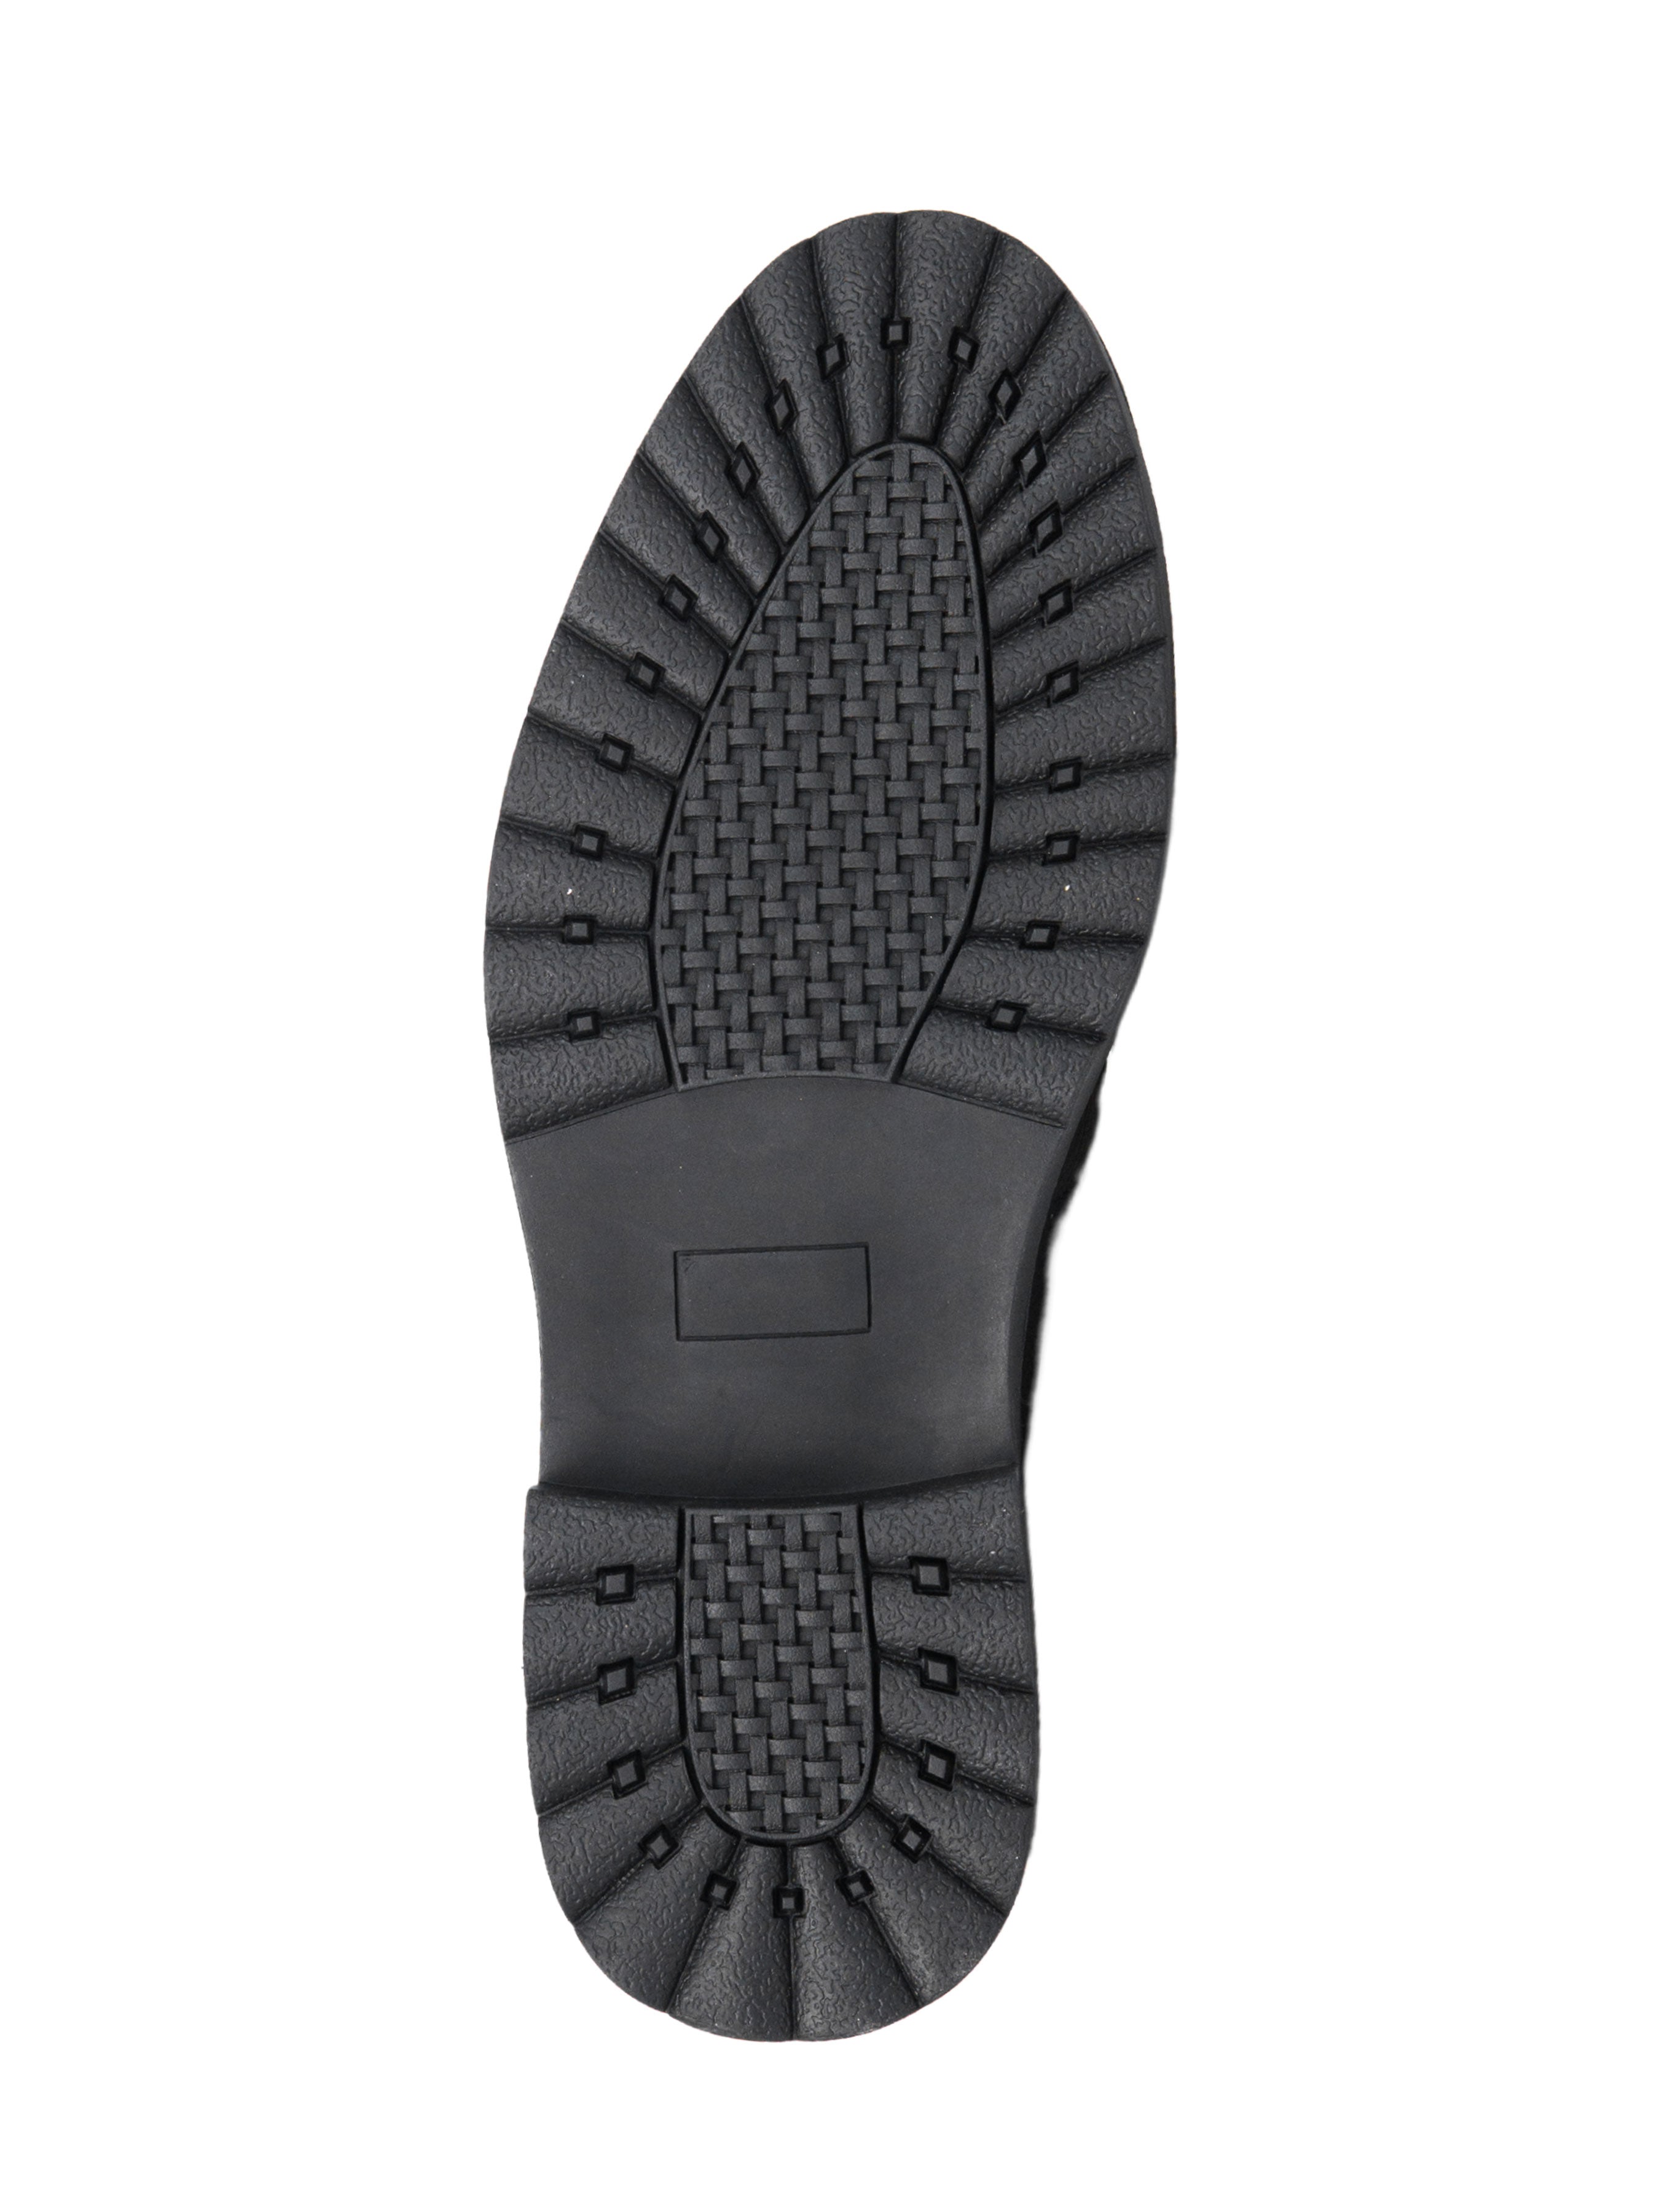 Rocky Tassel Loafer - Black Nubuck Leather (Combat Sole) - Zeve Shoes